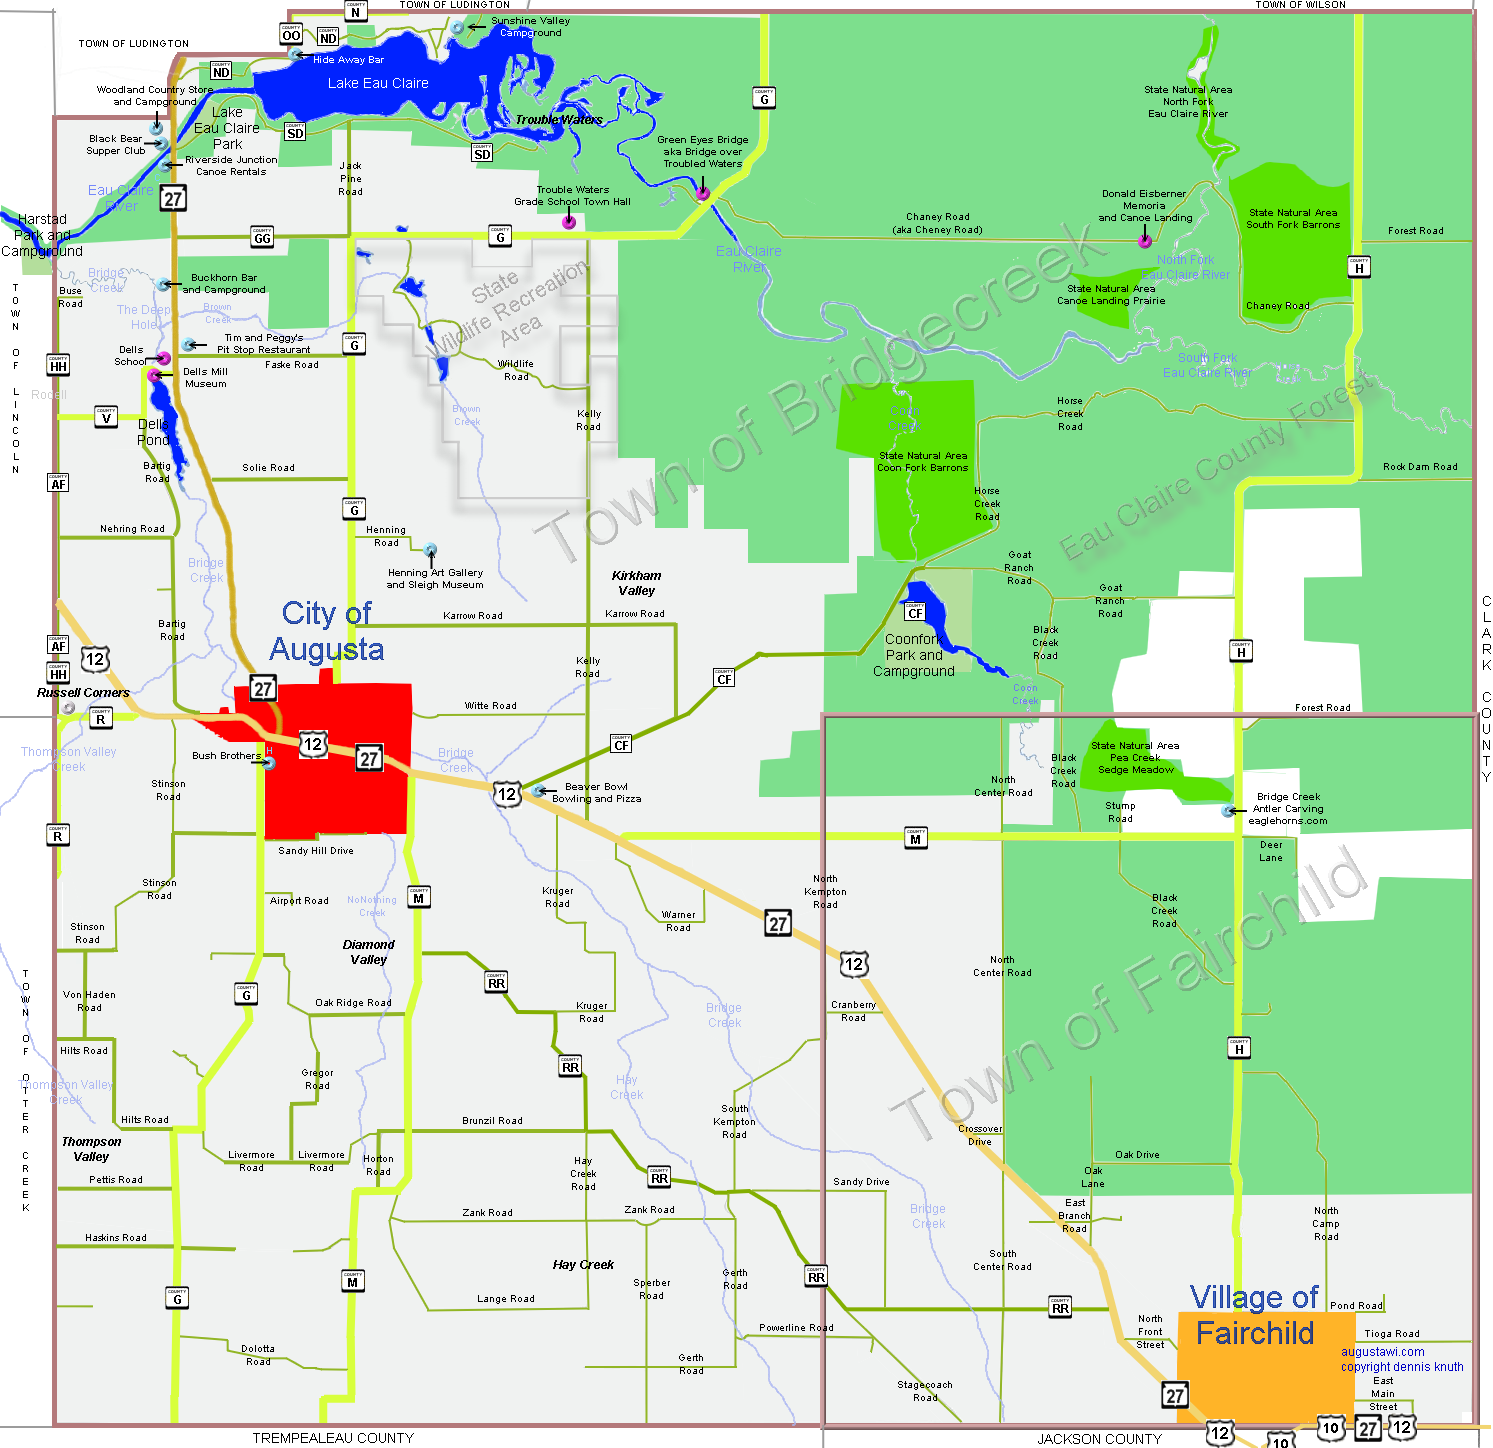 Bridge Creek And Fairchild Townships Map